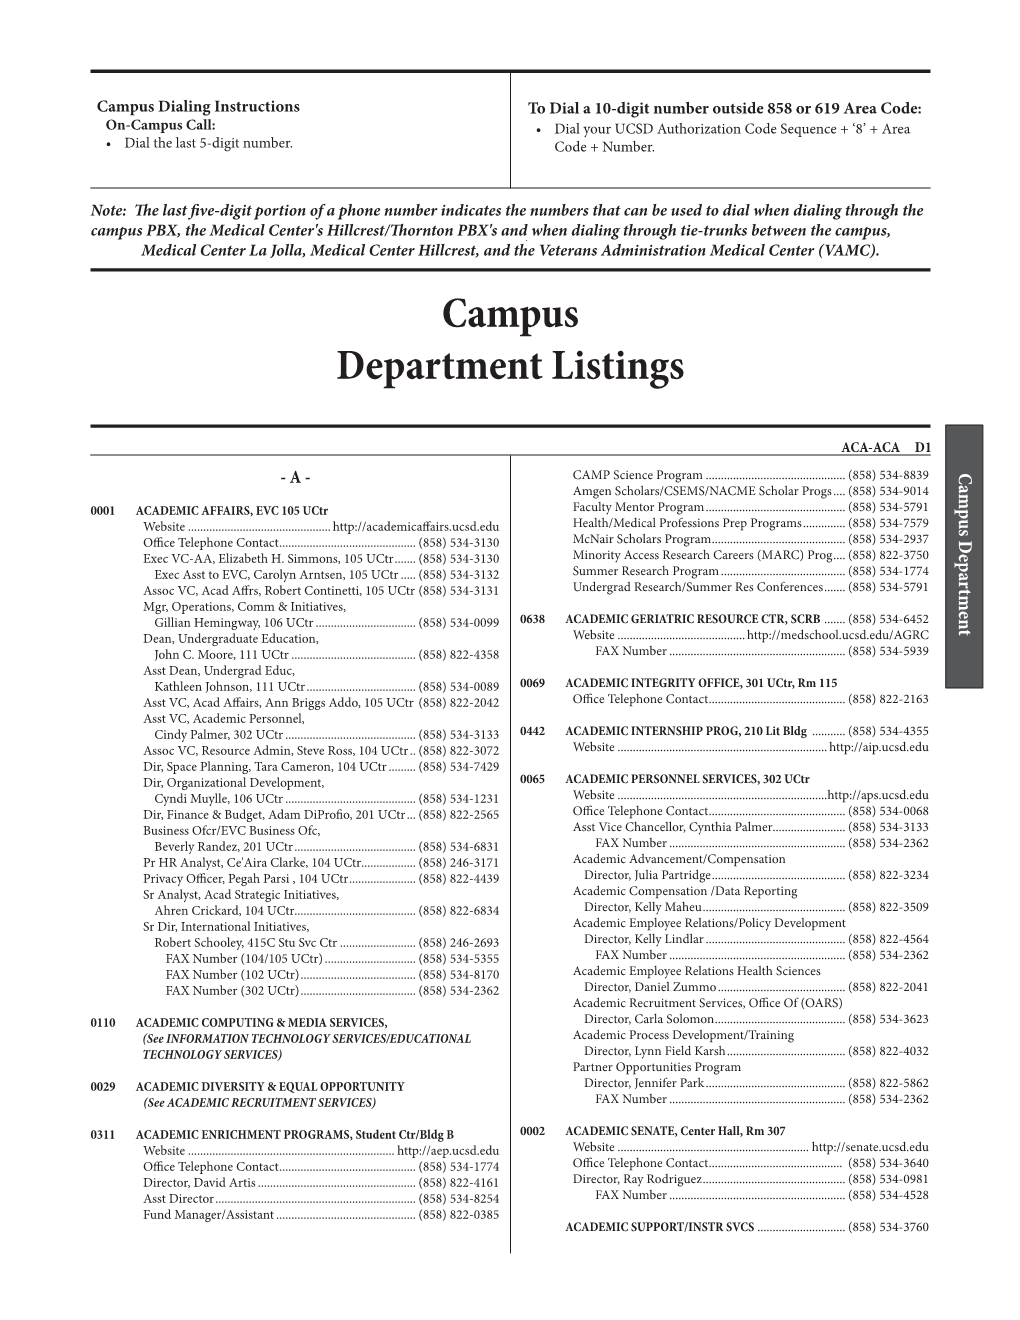 Campus Department Listings